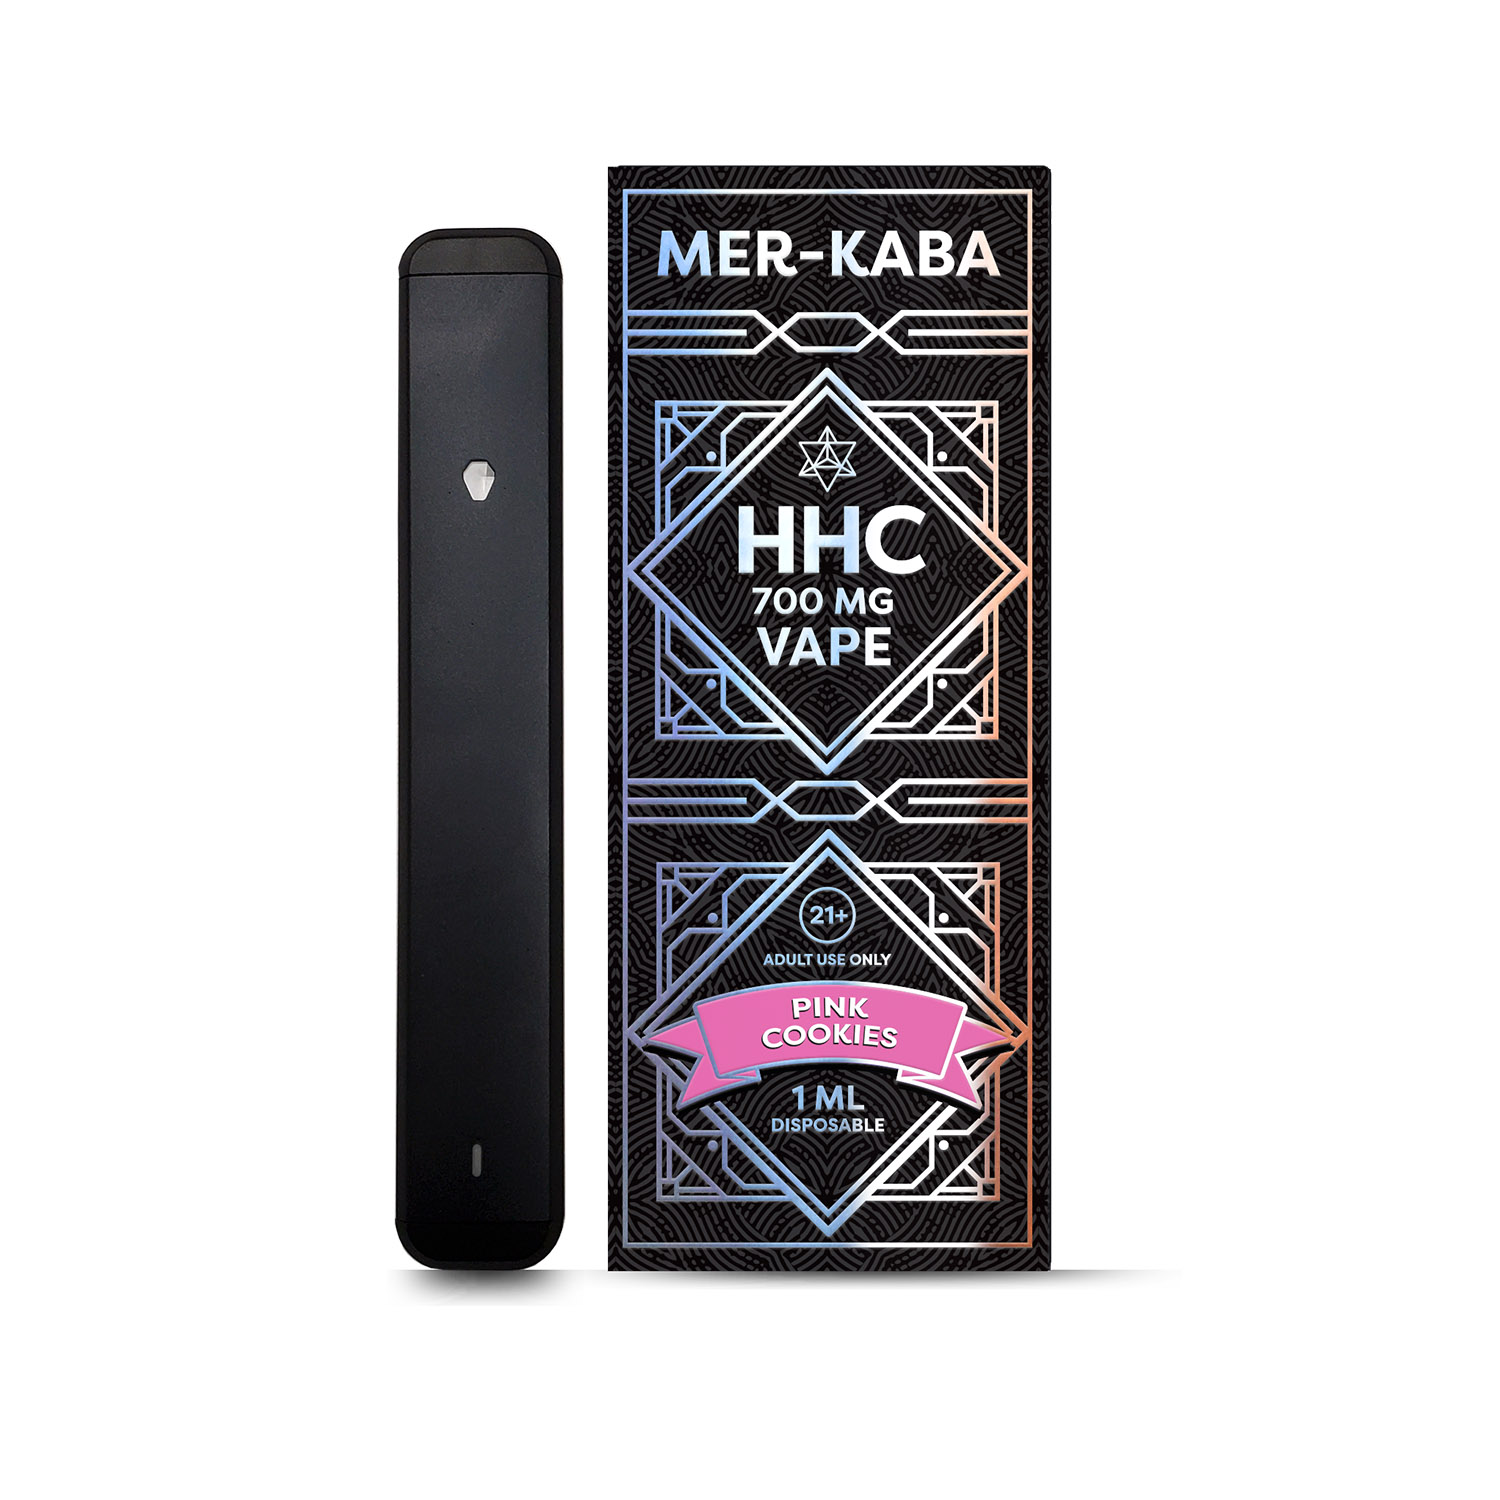 Mer-Kaba-700mg-HHC-Vape-Pink-Cookies